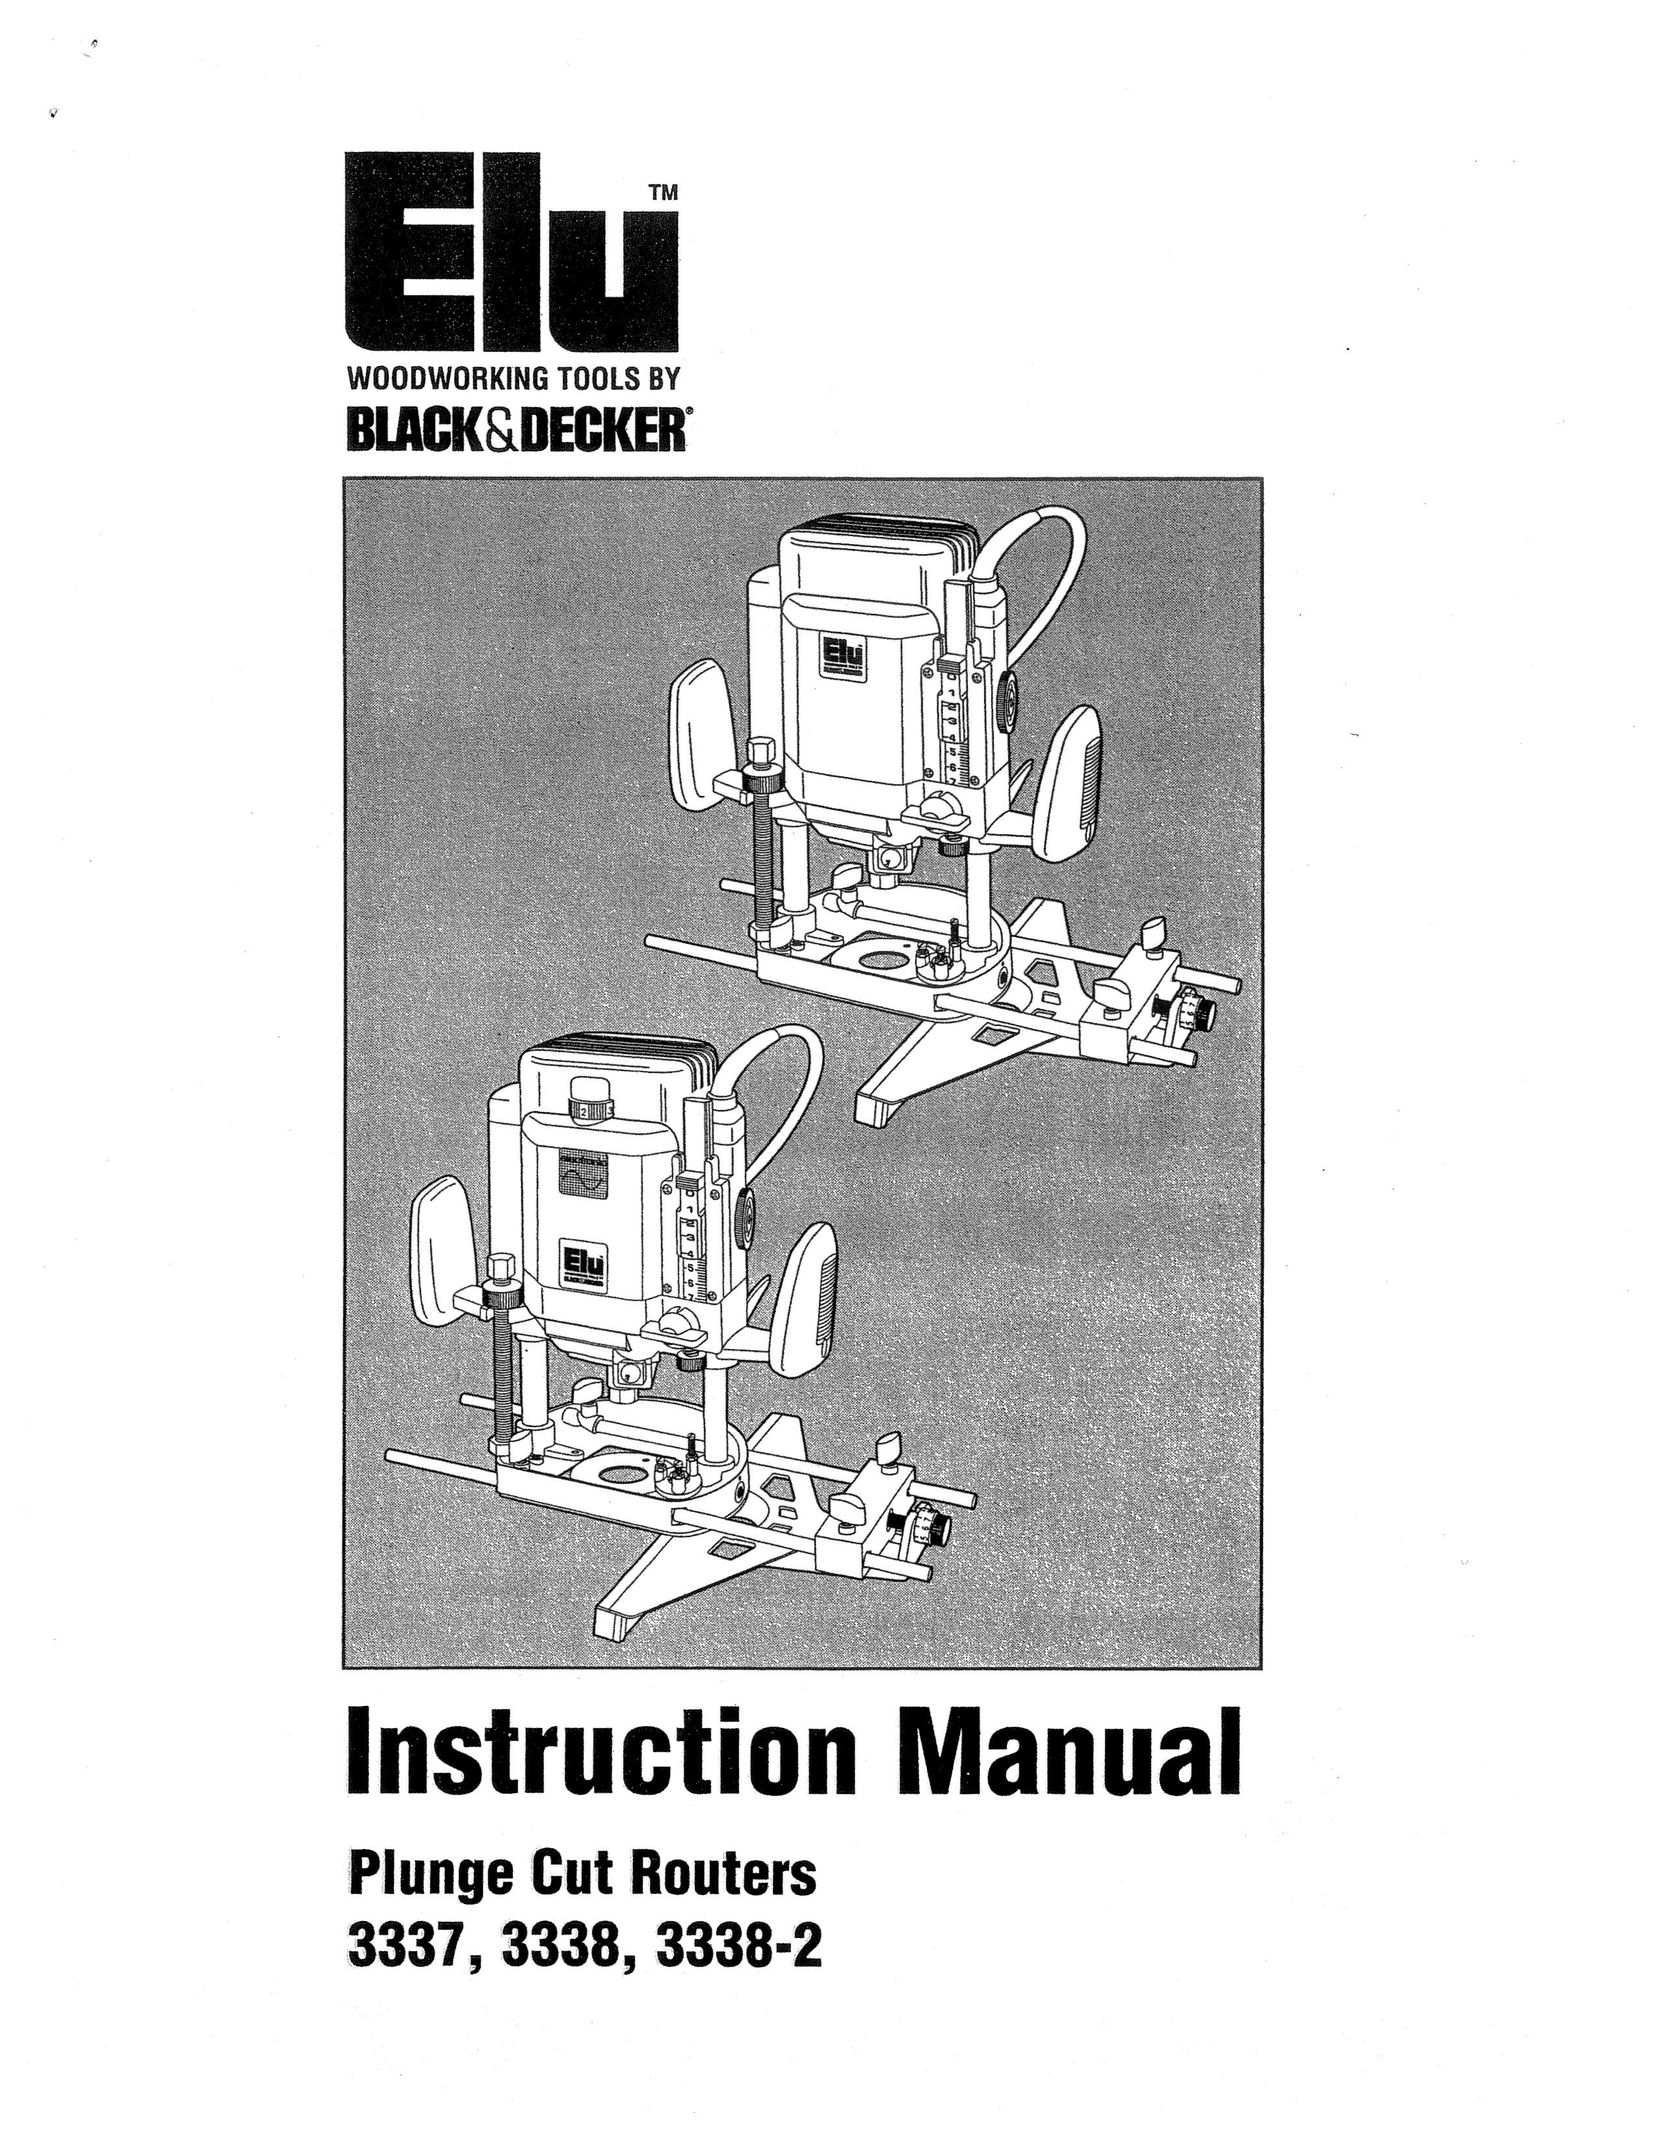 Black & Decker 3338 Router User Manual